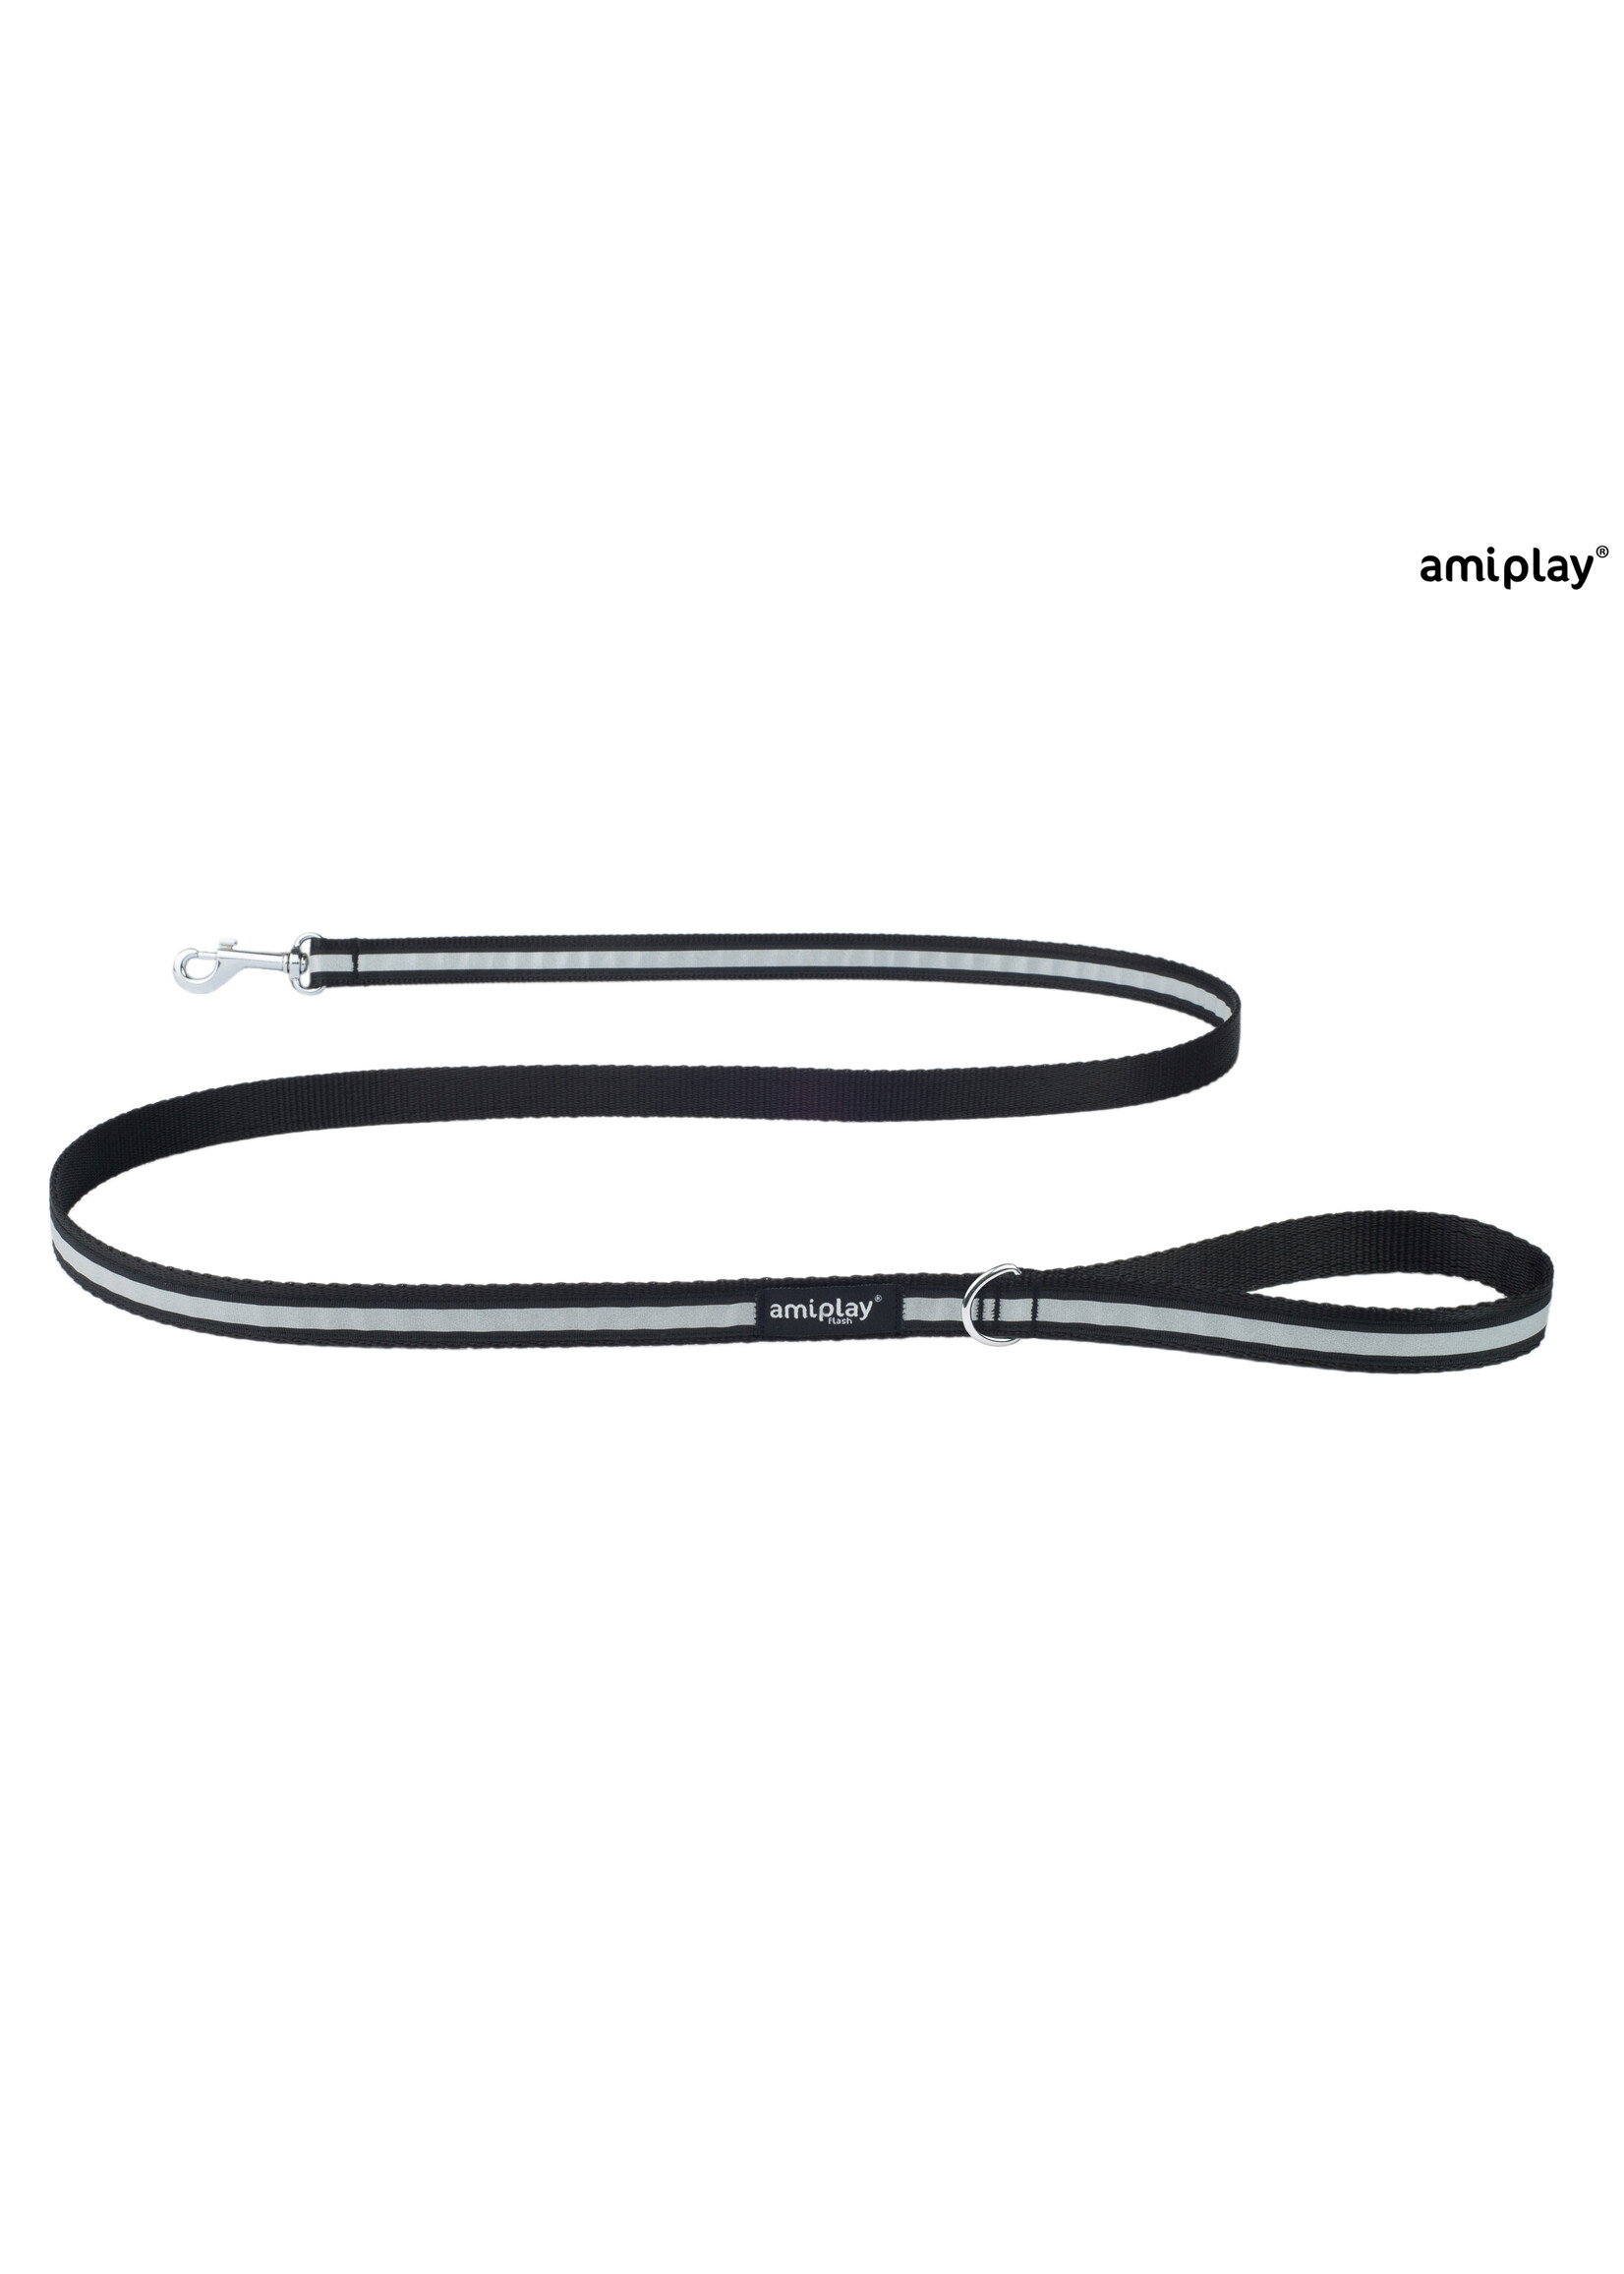 Amiplay Leiband Shine zwart maat-M / 150x1,5cm